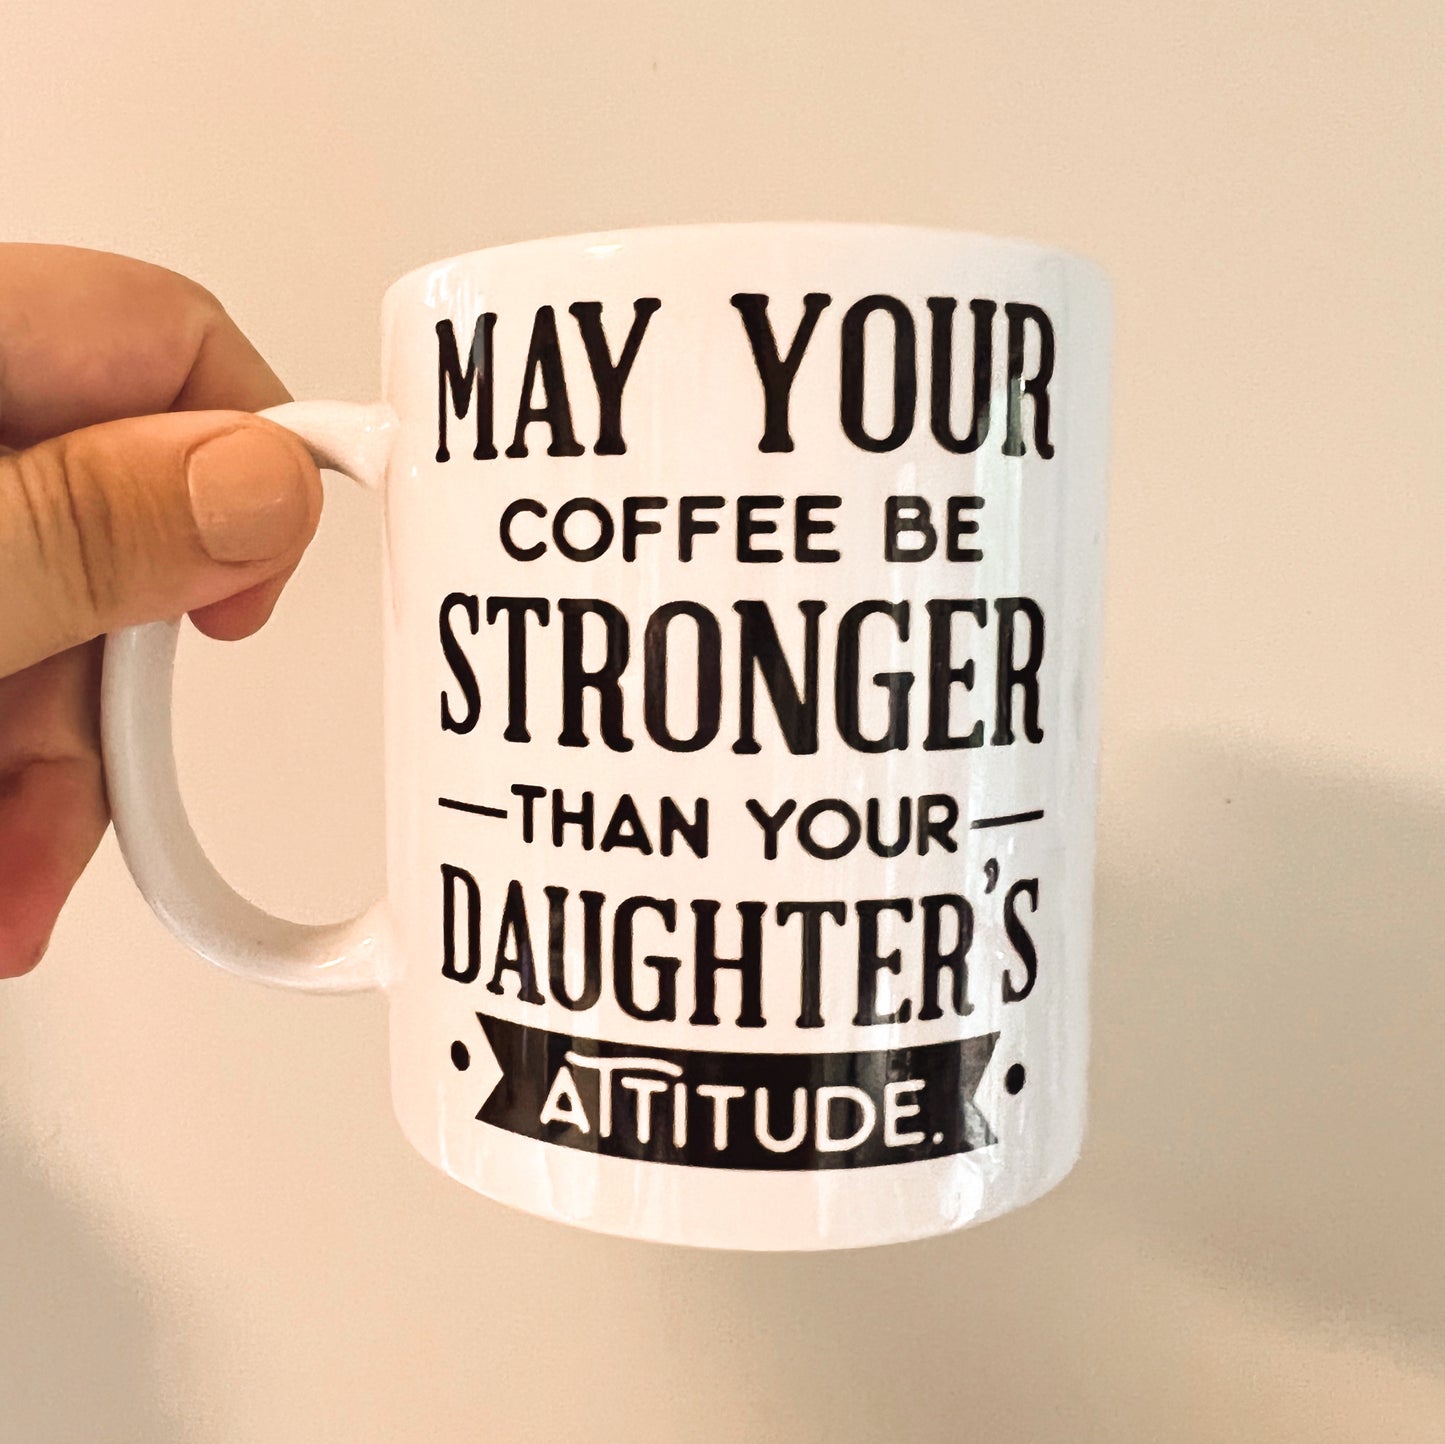 Daughters attitude